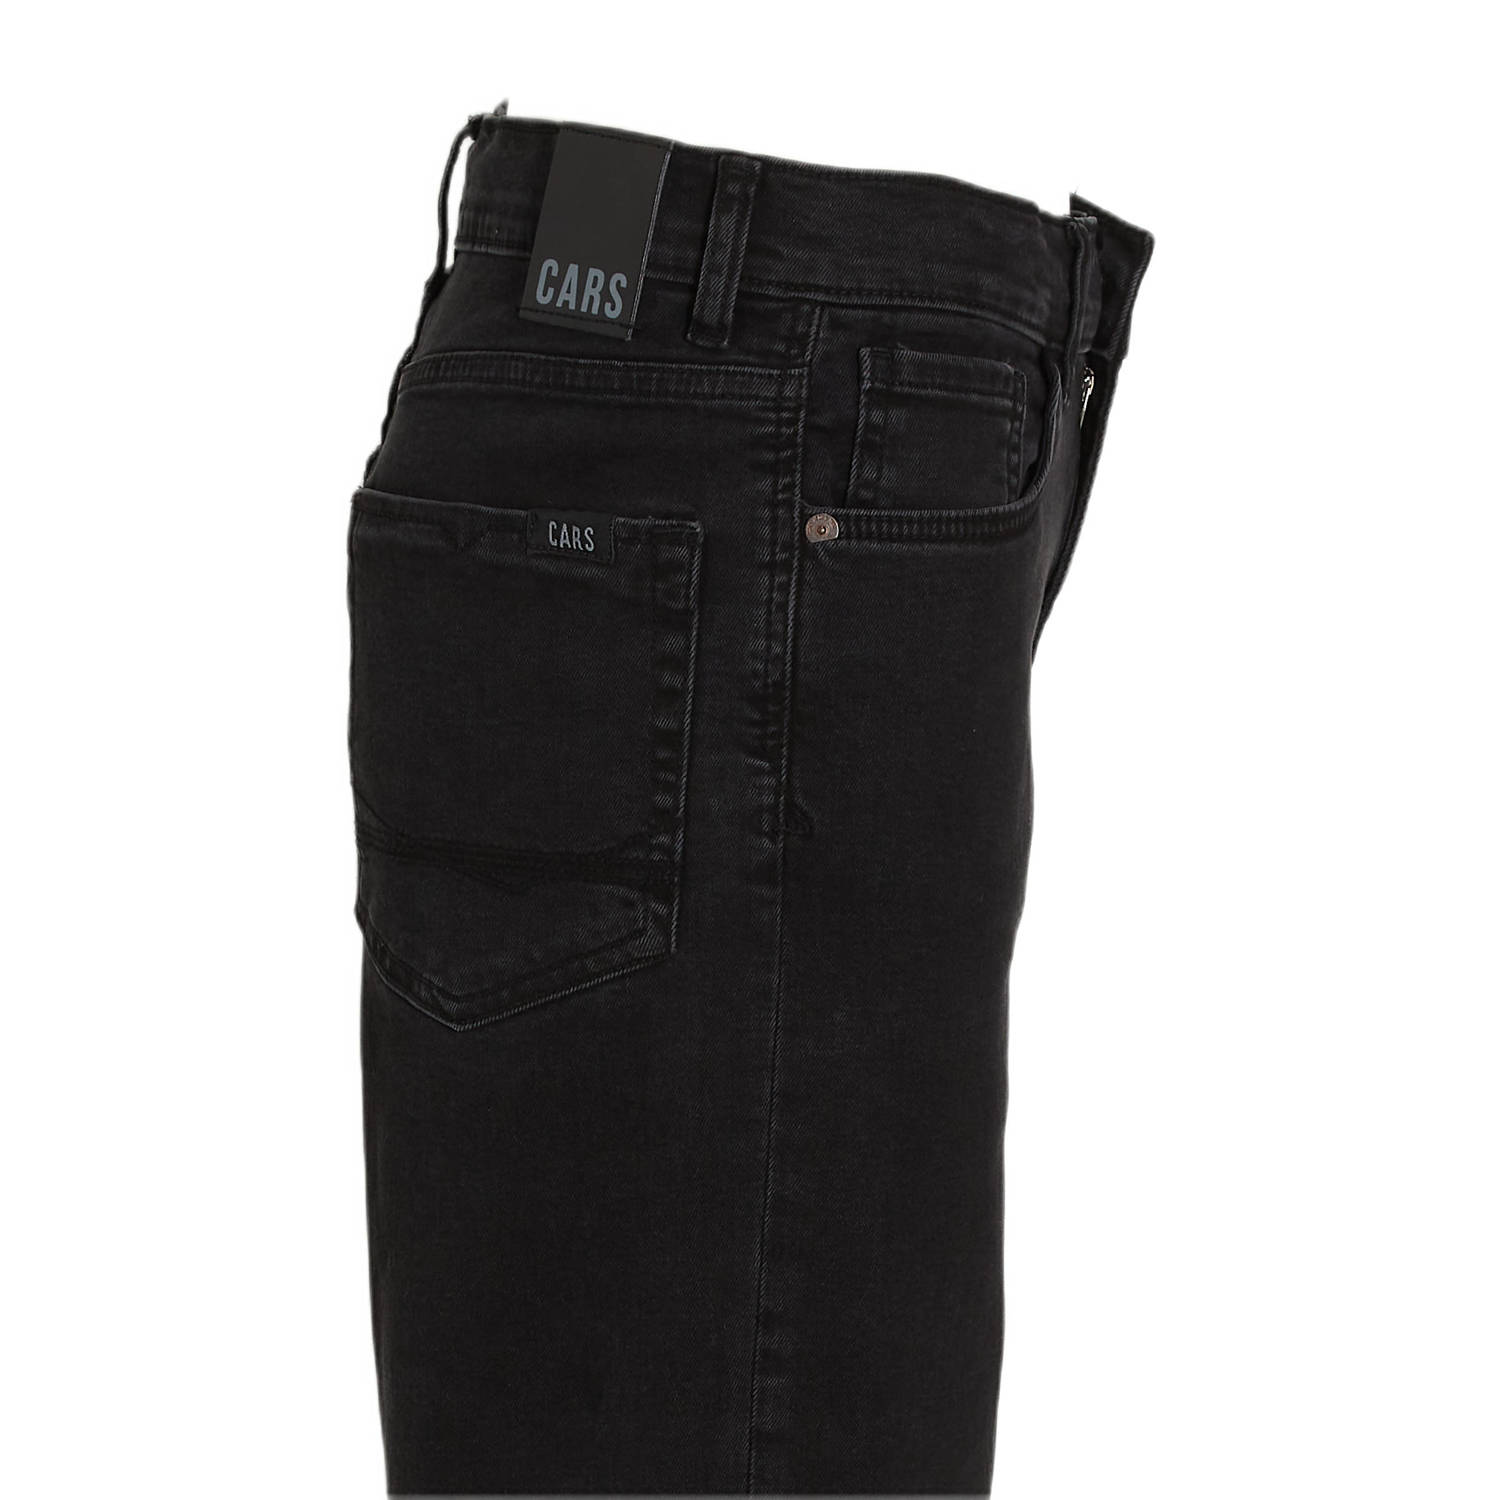 Cars wide leg jeans GARWELL black used